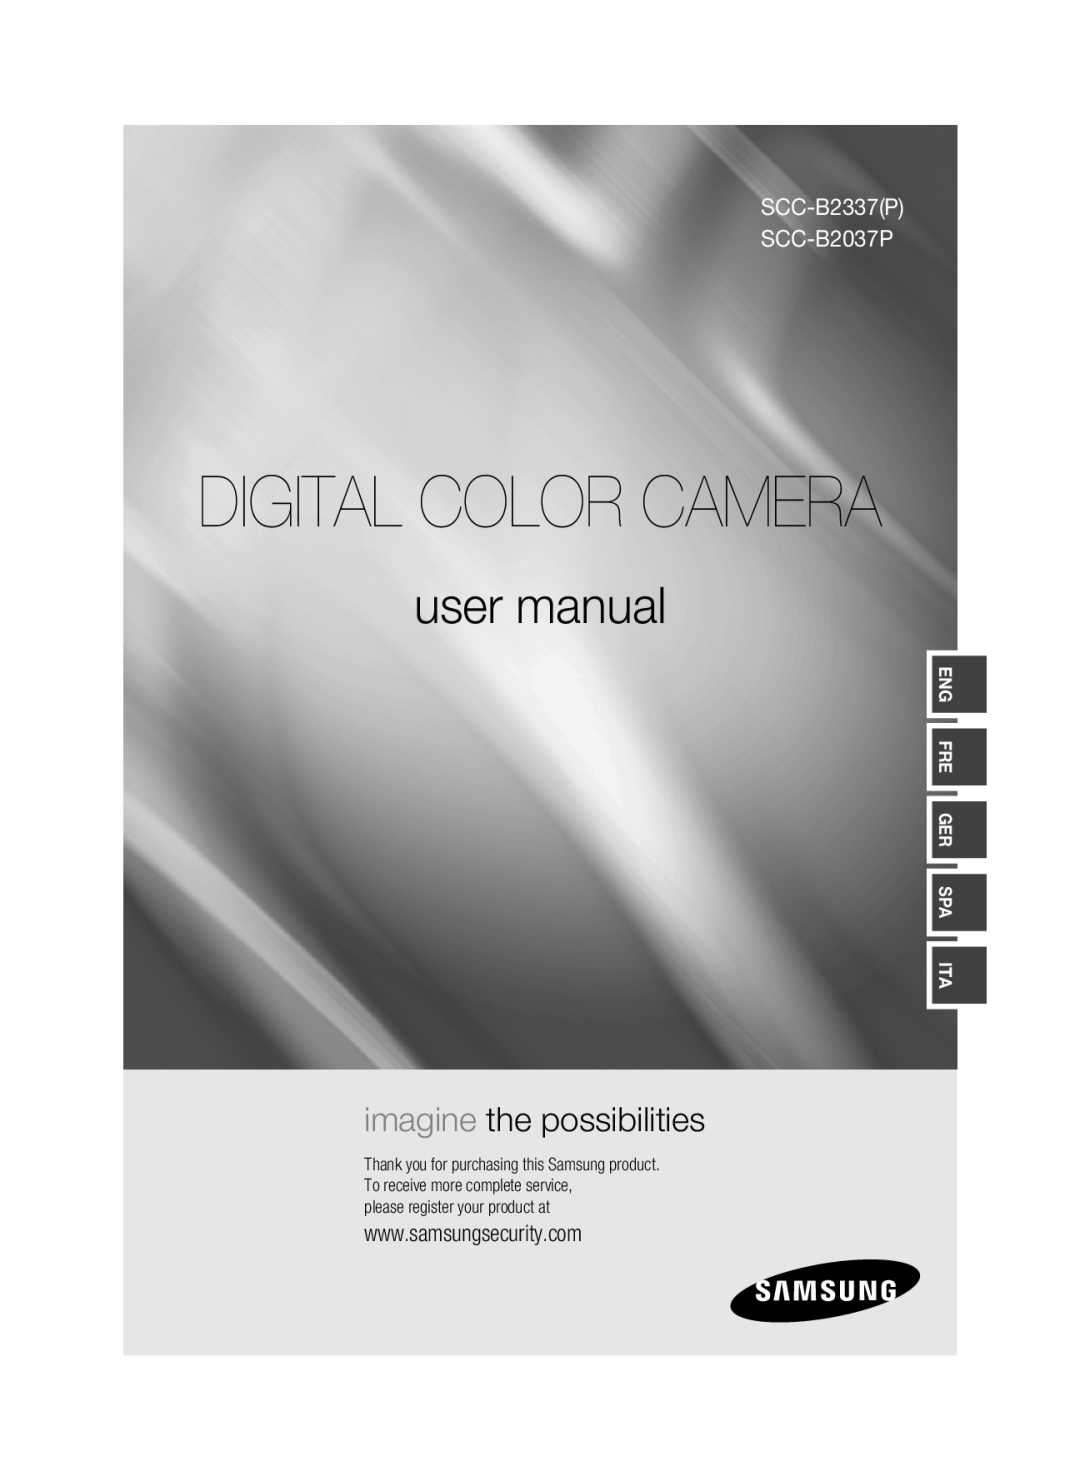 Samsung manual Digital Color Camera, user manual, imagine the possibilities, SCC-B2337P SCC-B2037P 